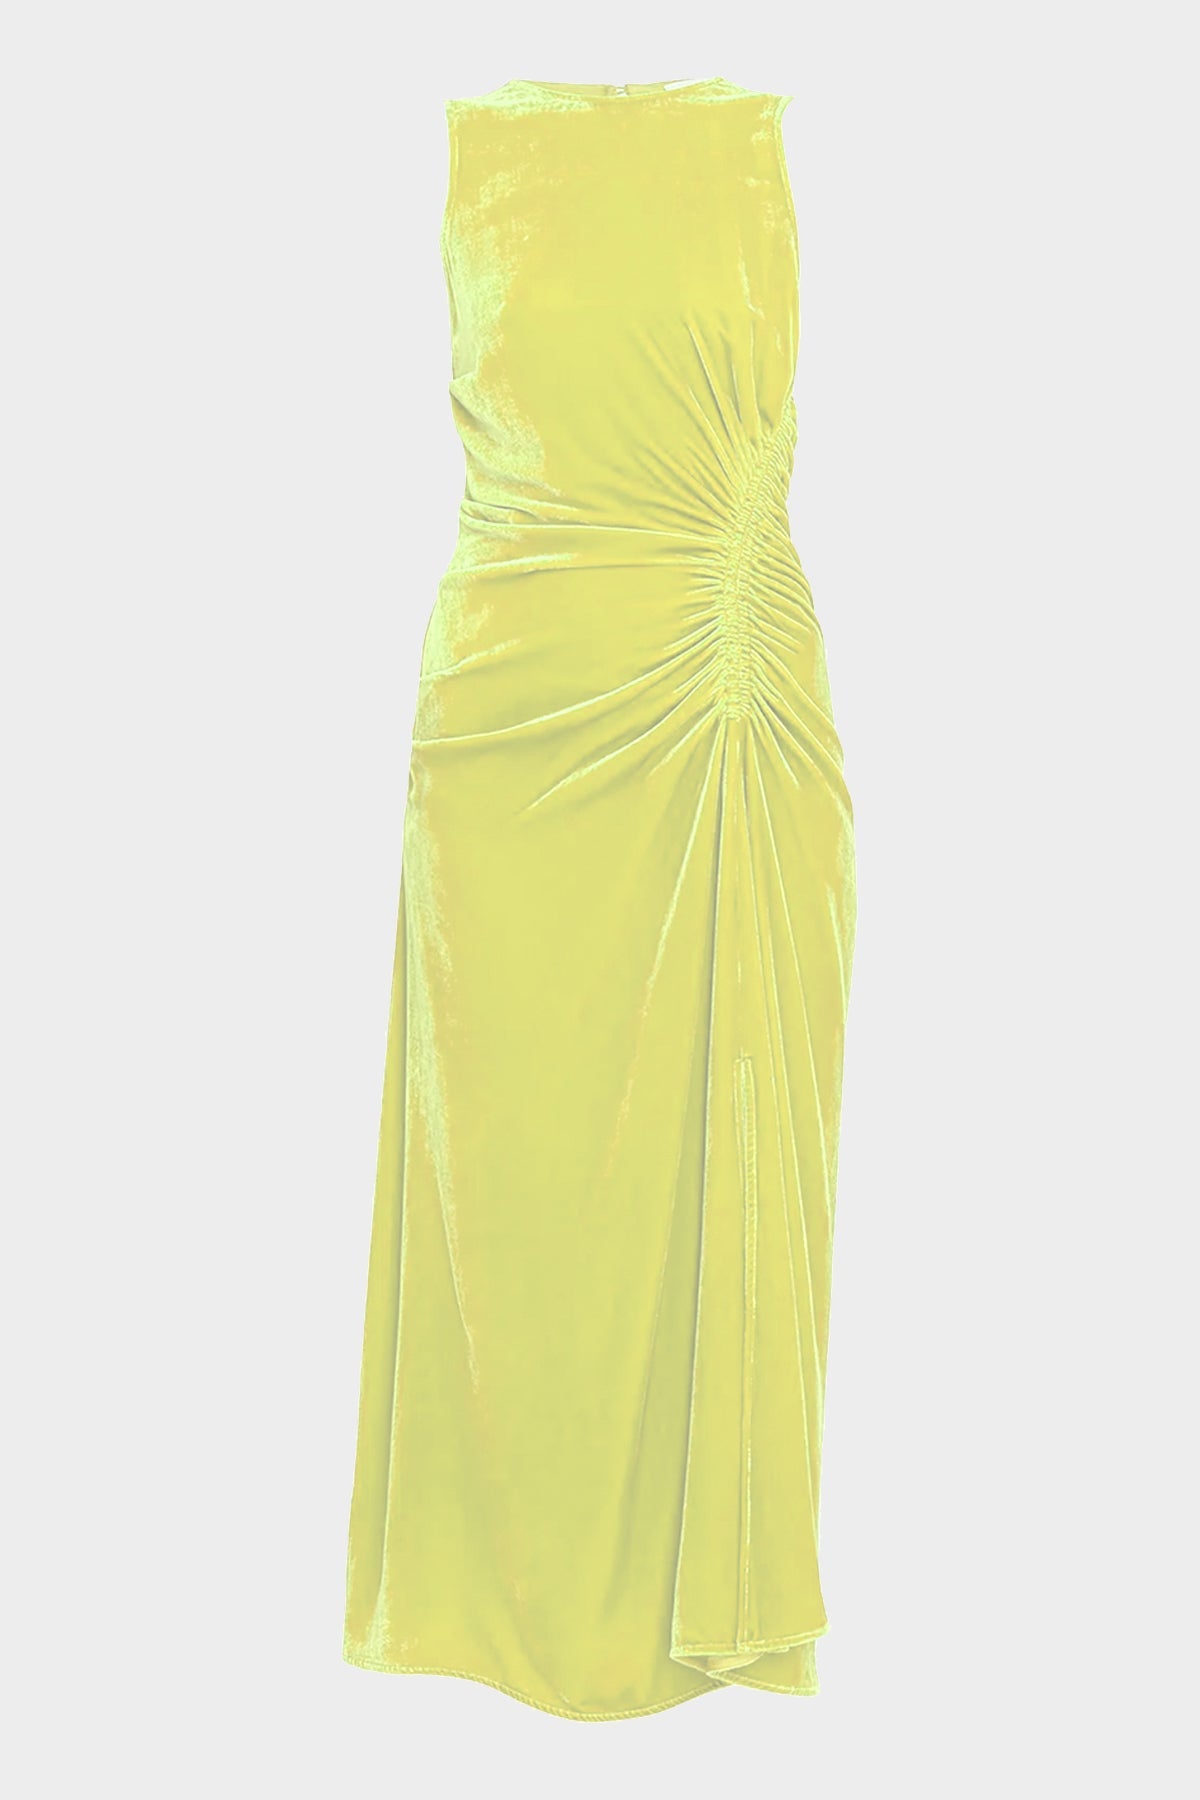 Cornelia Velvet Dress in Pistachio - shop-olivia.com